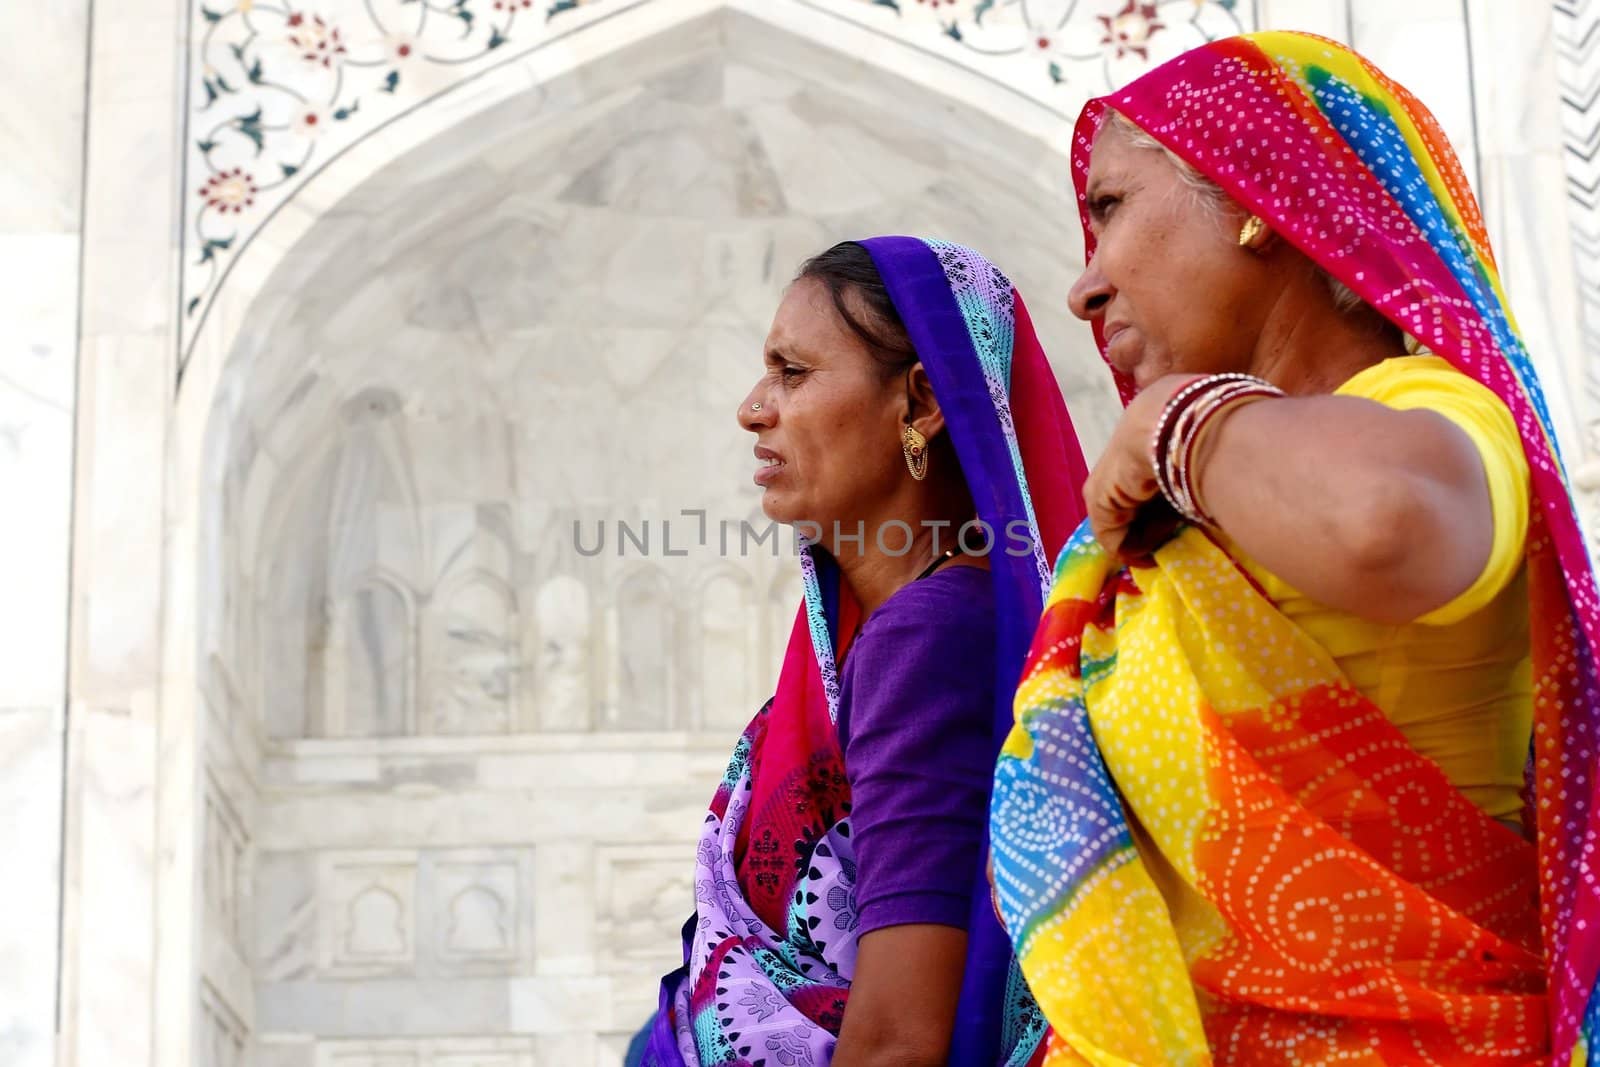 women wearing sari - Taj Mahal - India